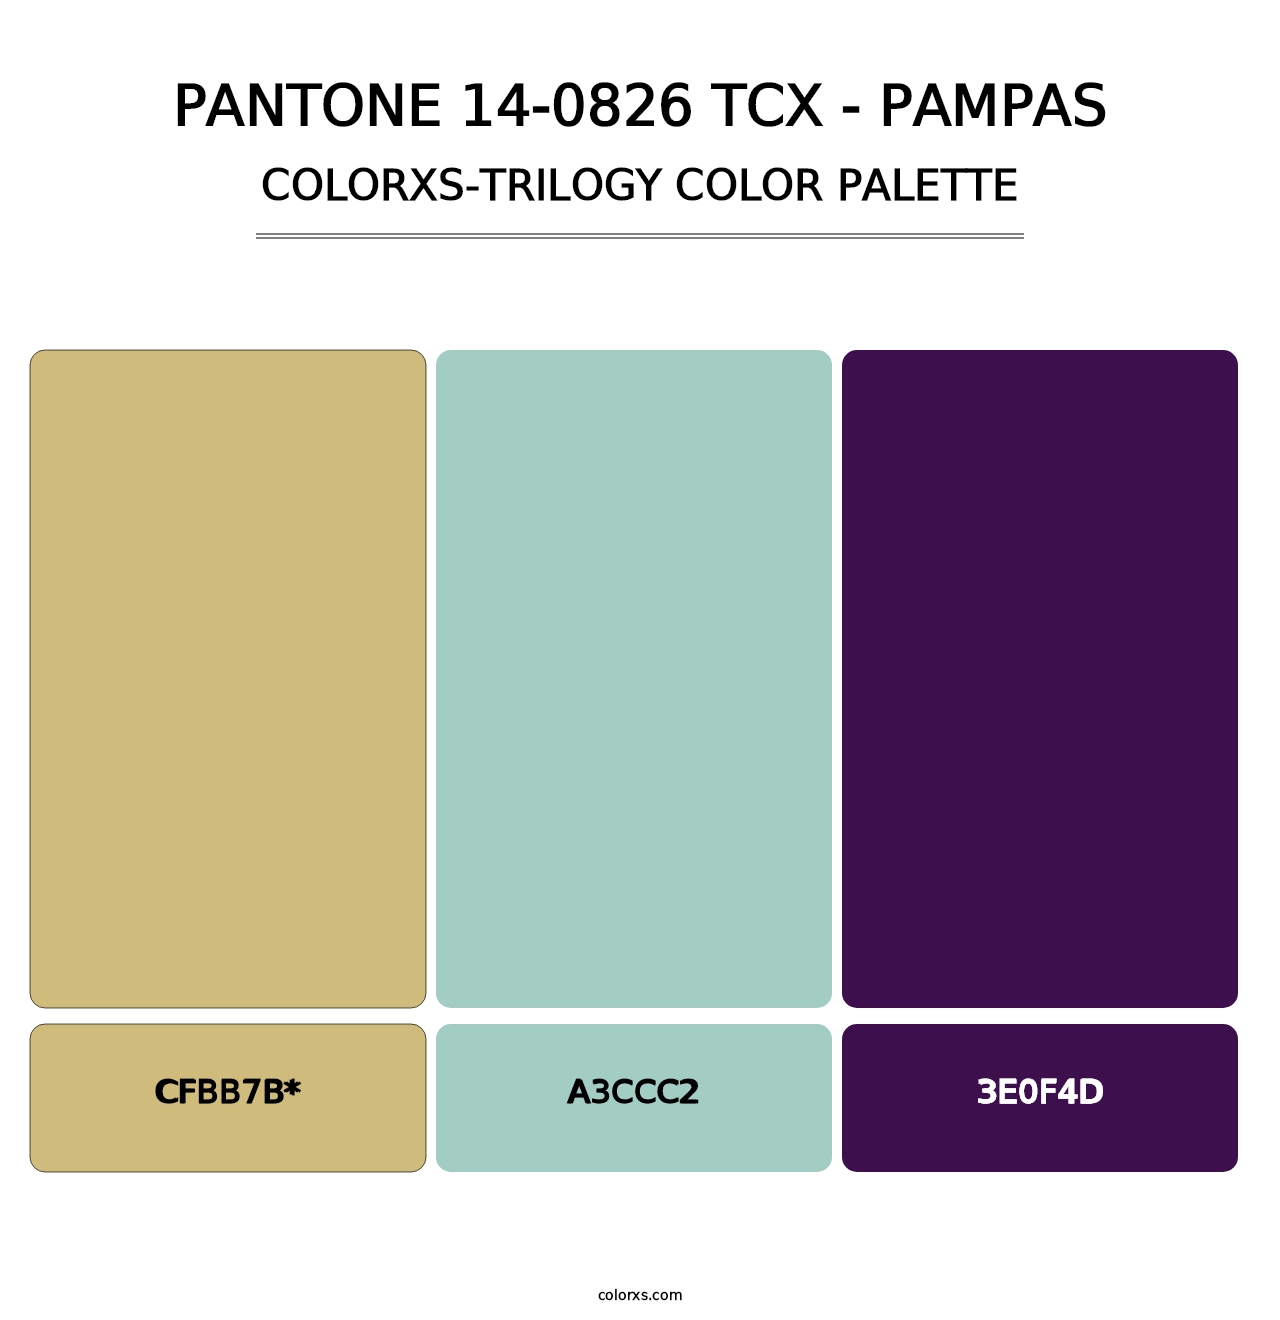 PANTONE 14-0826 TCX - Pampas - Colorxs Trilogy Palette